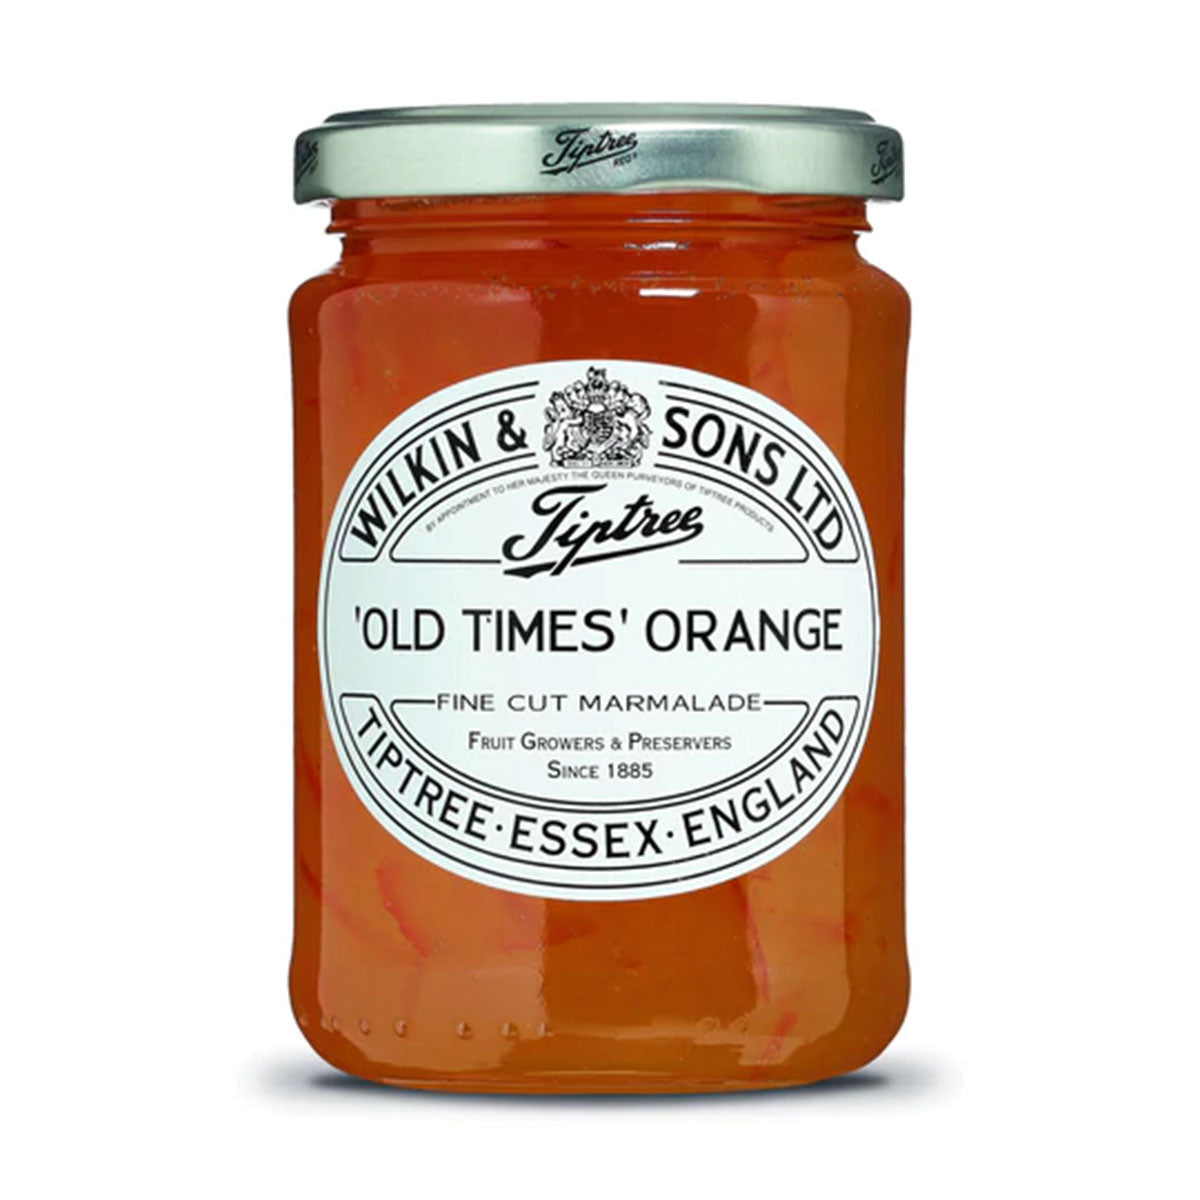 Tiptree Old Times'orange Marmalade